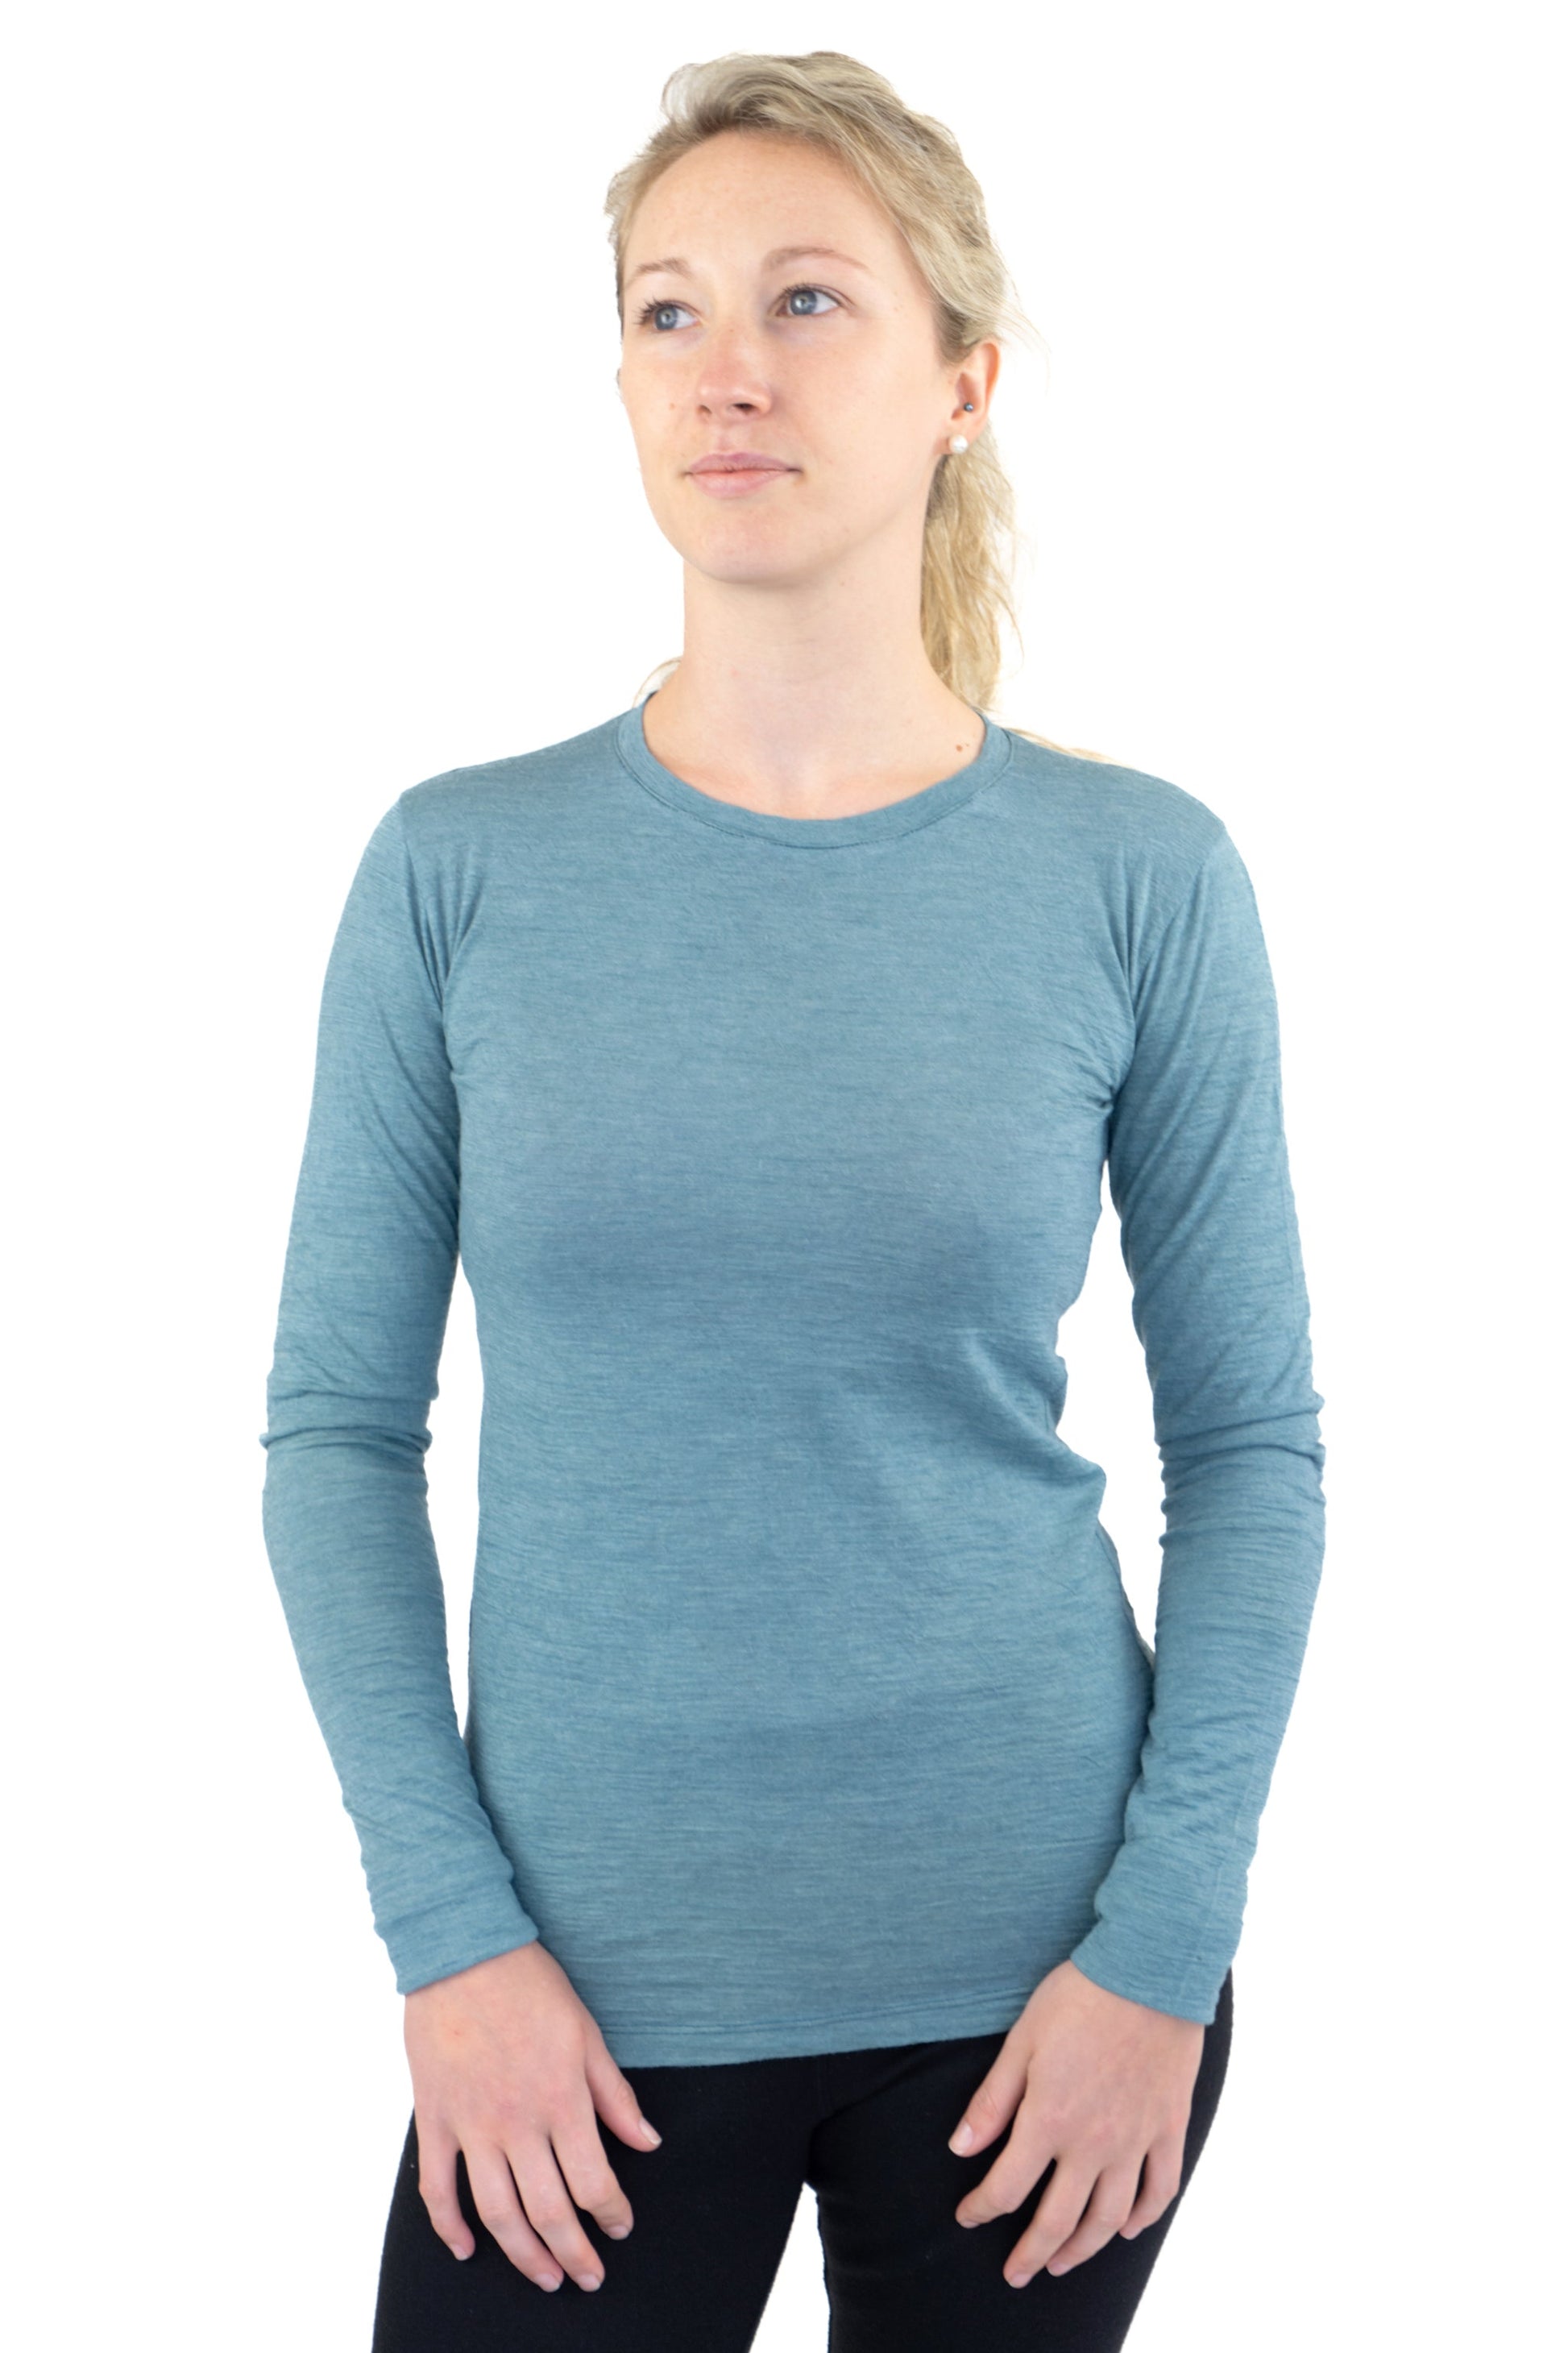 Women's Alpaca Wool Long Sleeve Shirt: 160 Ultralight color Natural Turquoise